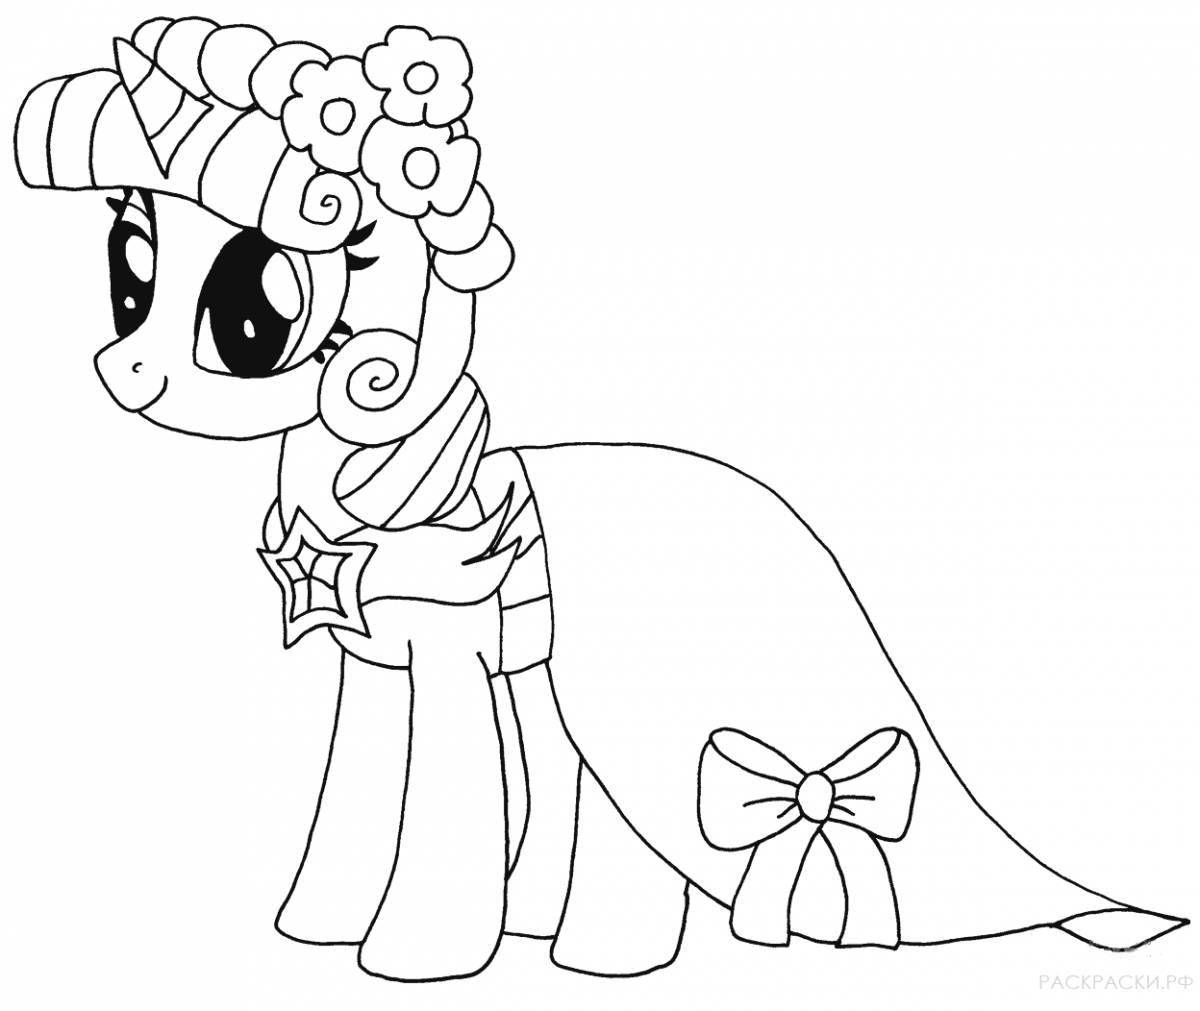 Coloring page cute pony malito